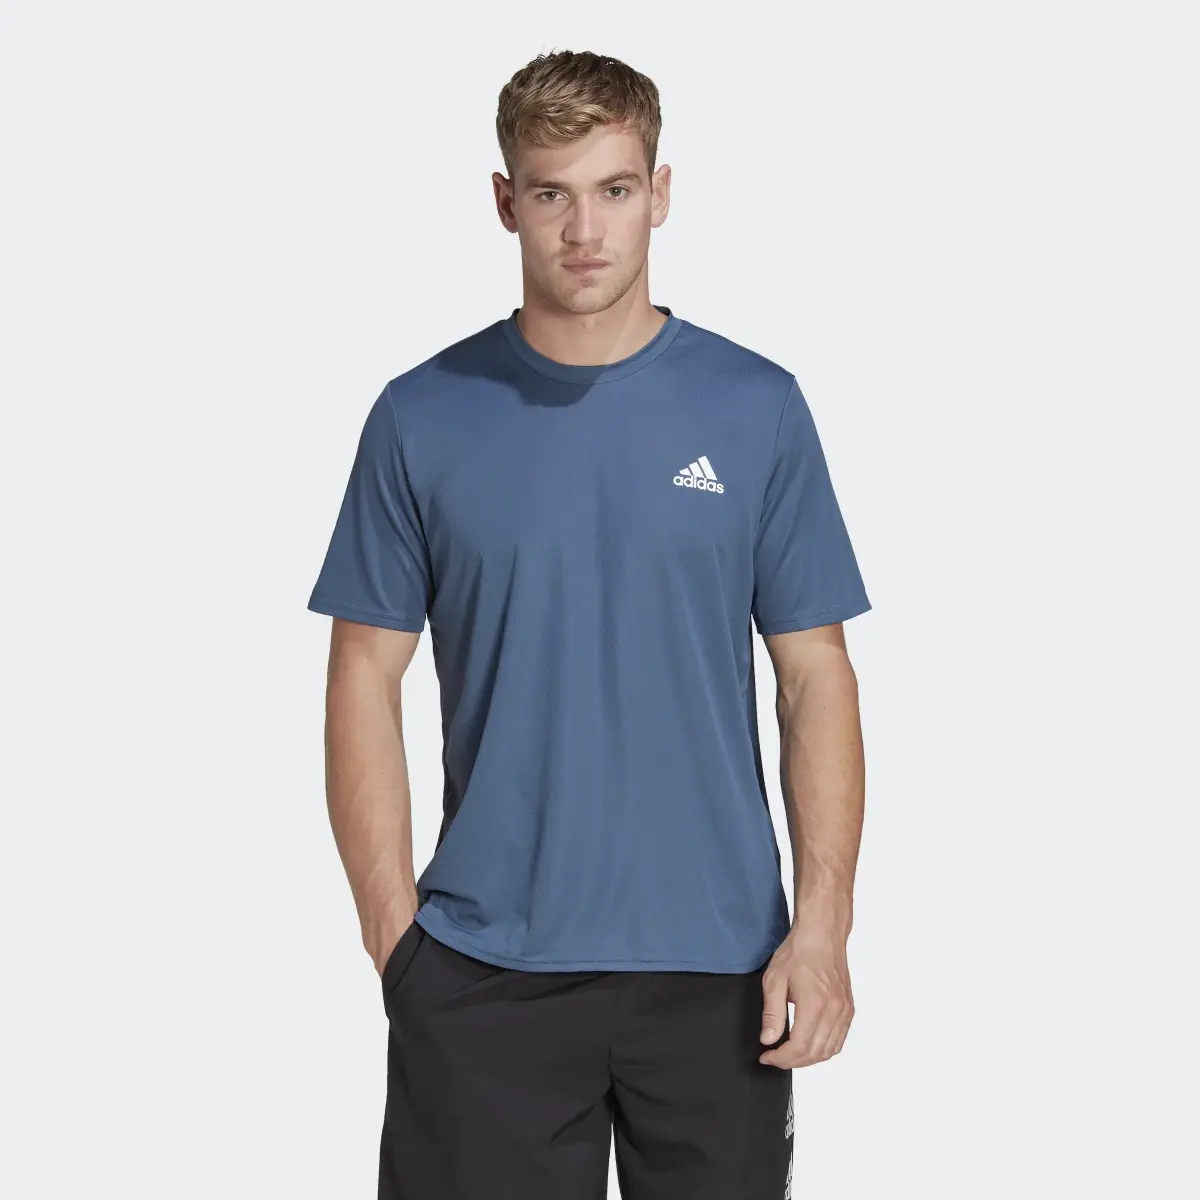 Adidas AEROREADY Designed for Movement T-Shirt. 2